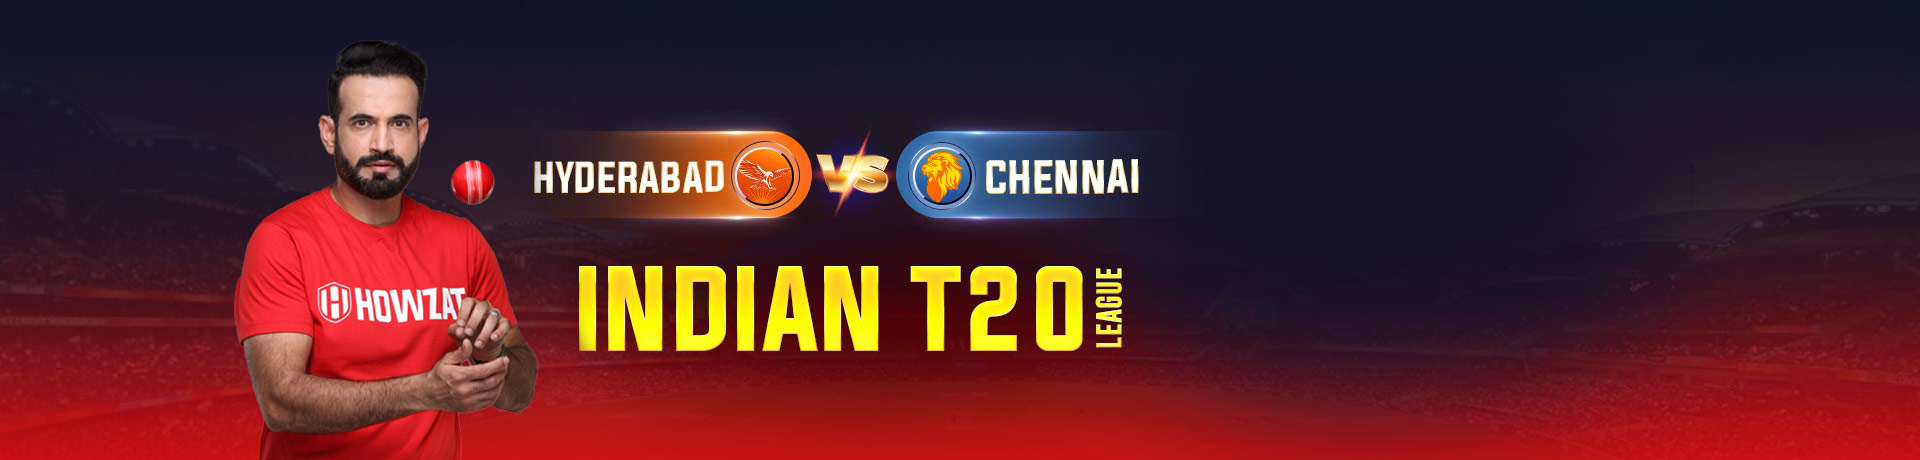 Hyderabad vs Chennai Indian T20 League